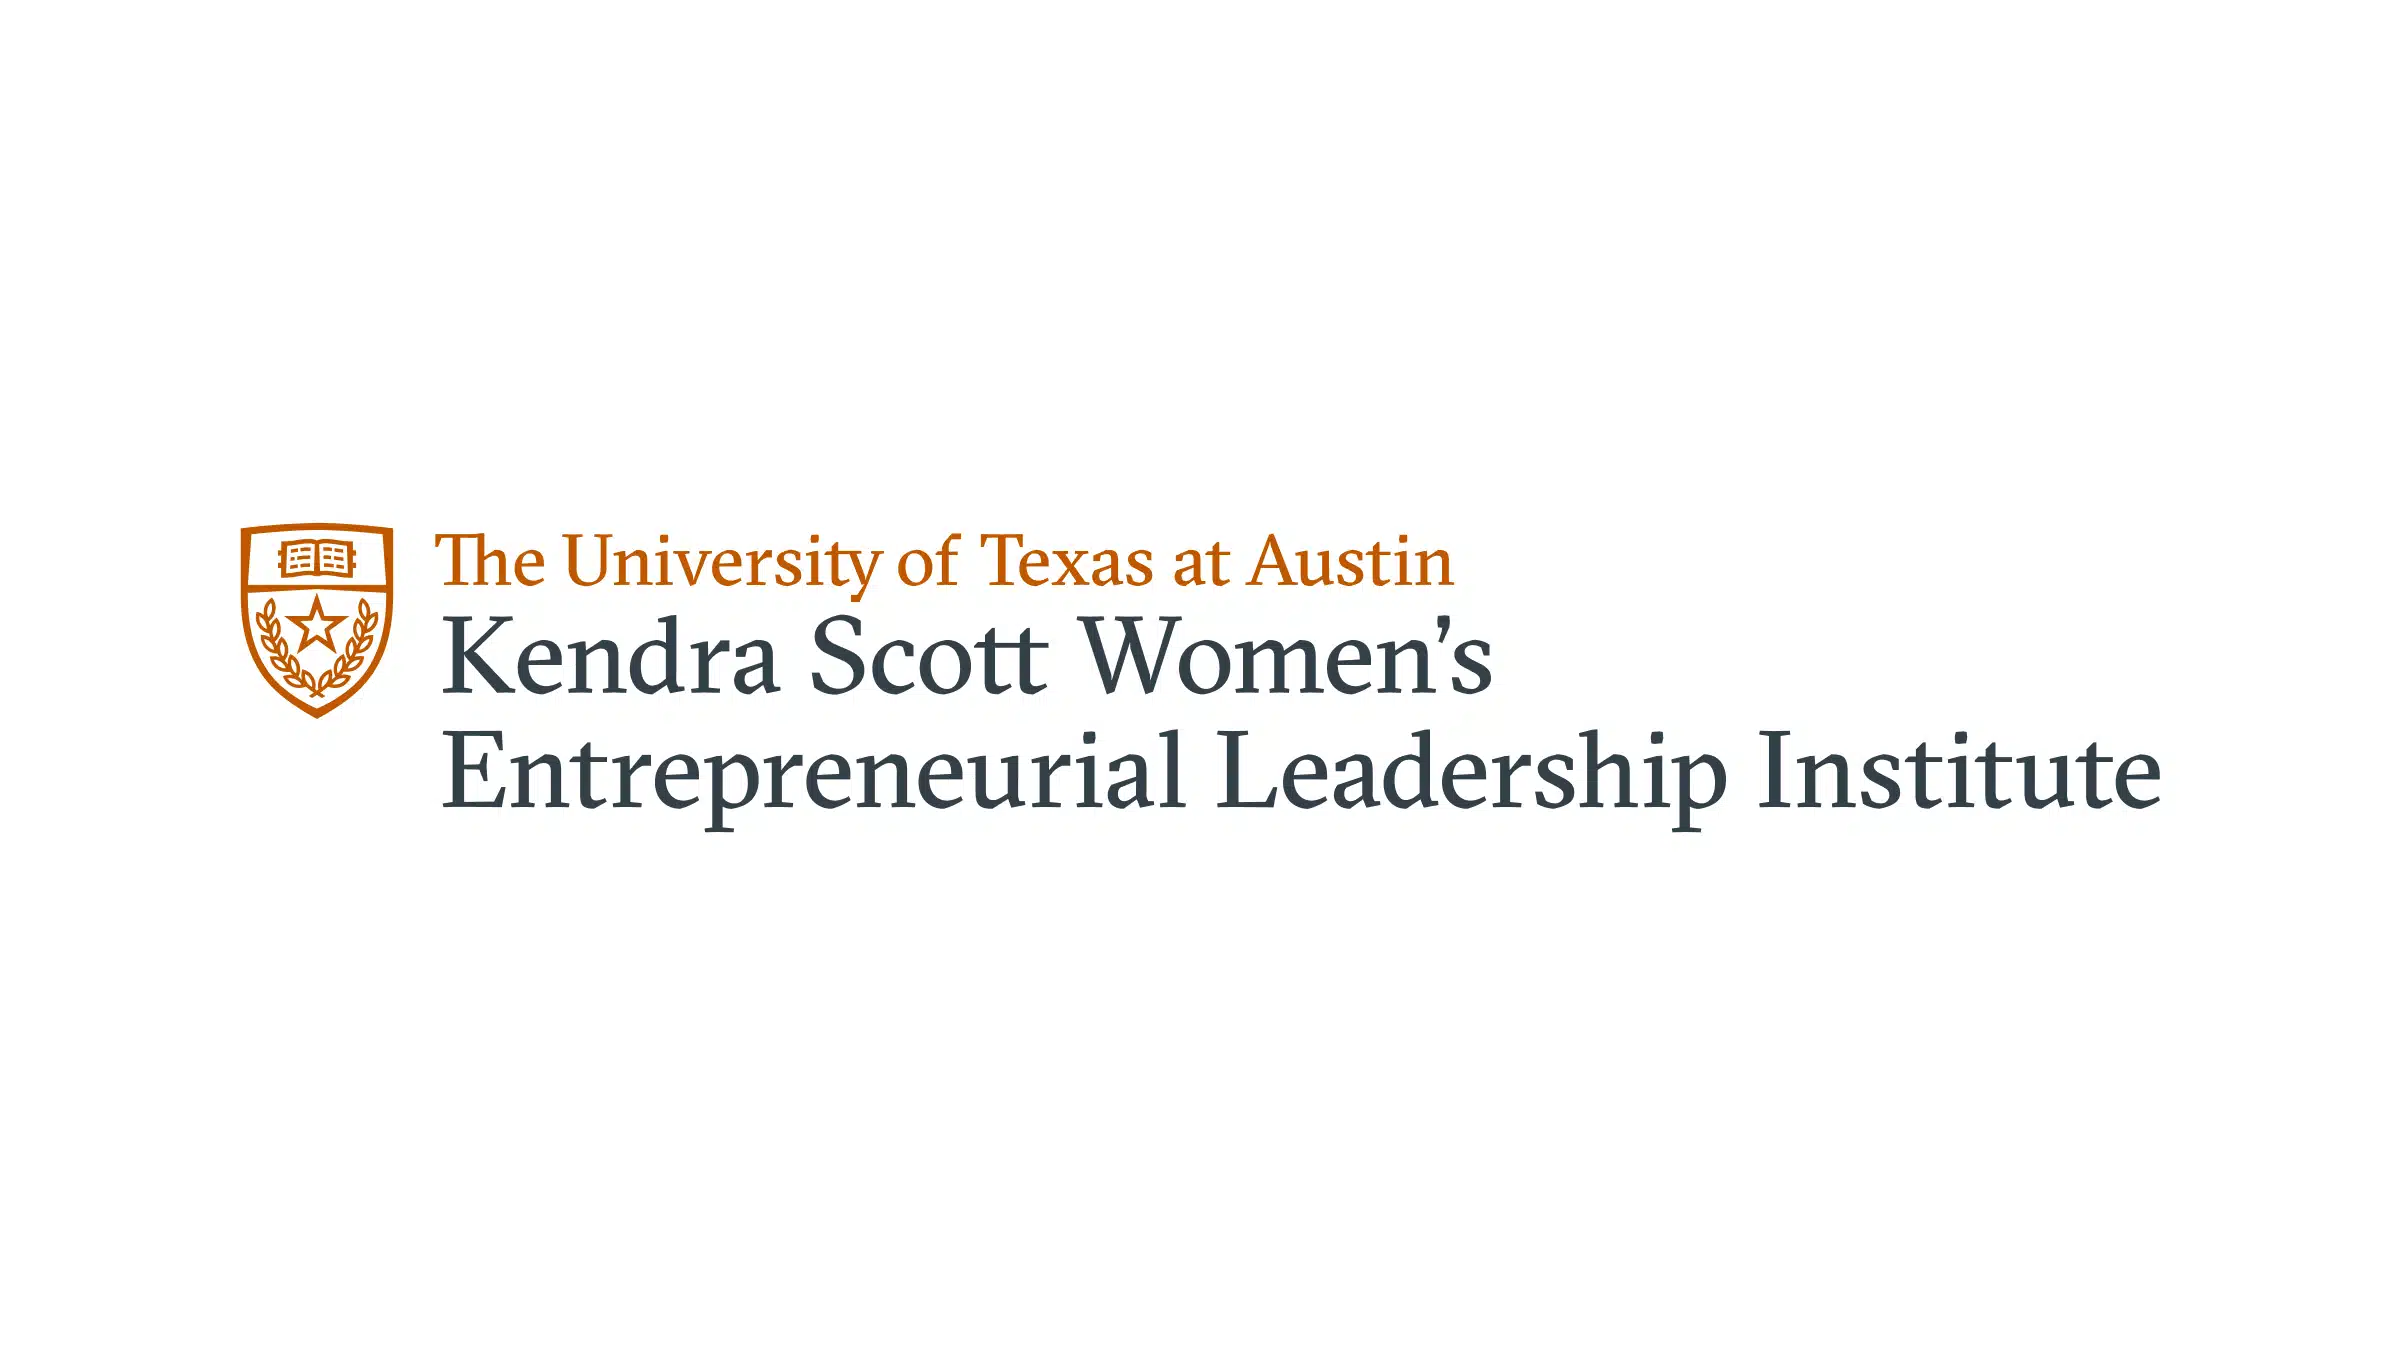 Kendra Scott Women's Entrepreneurial Leadership Institute